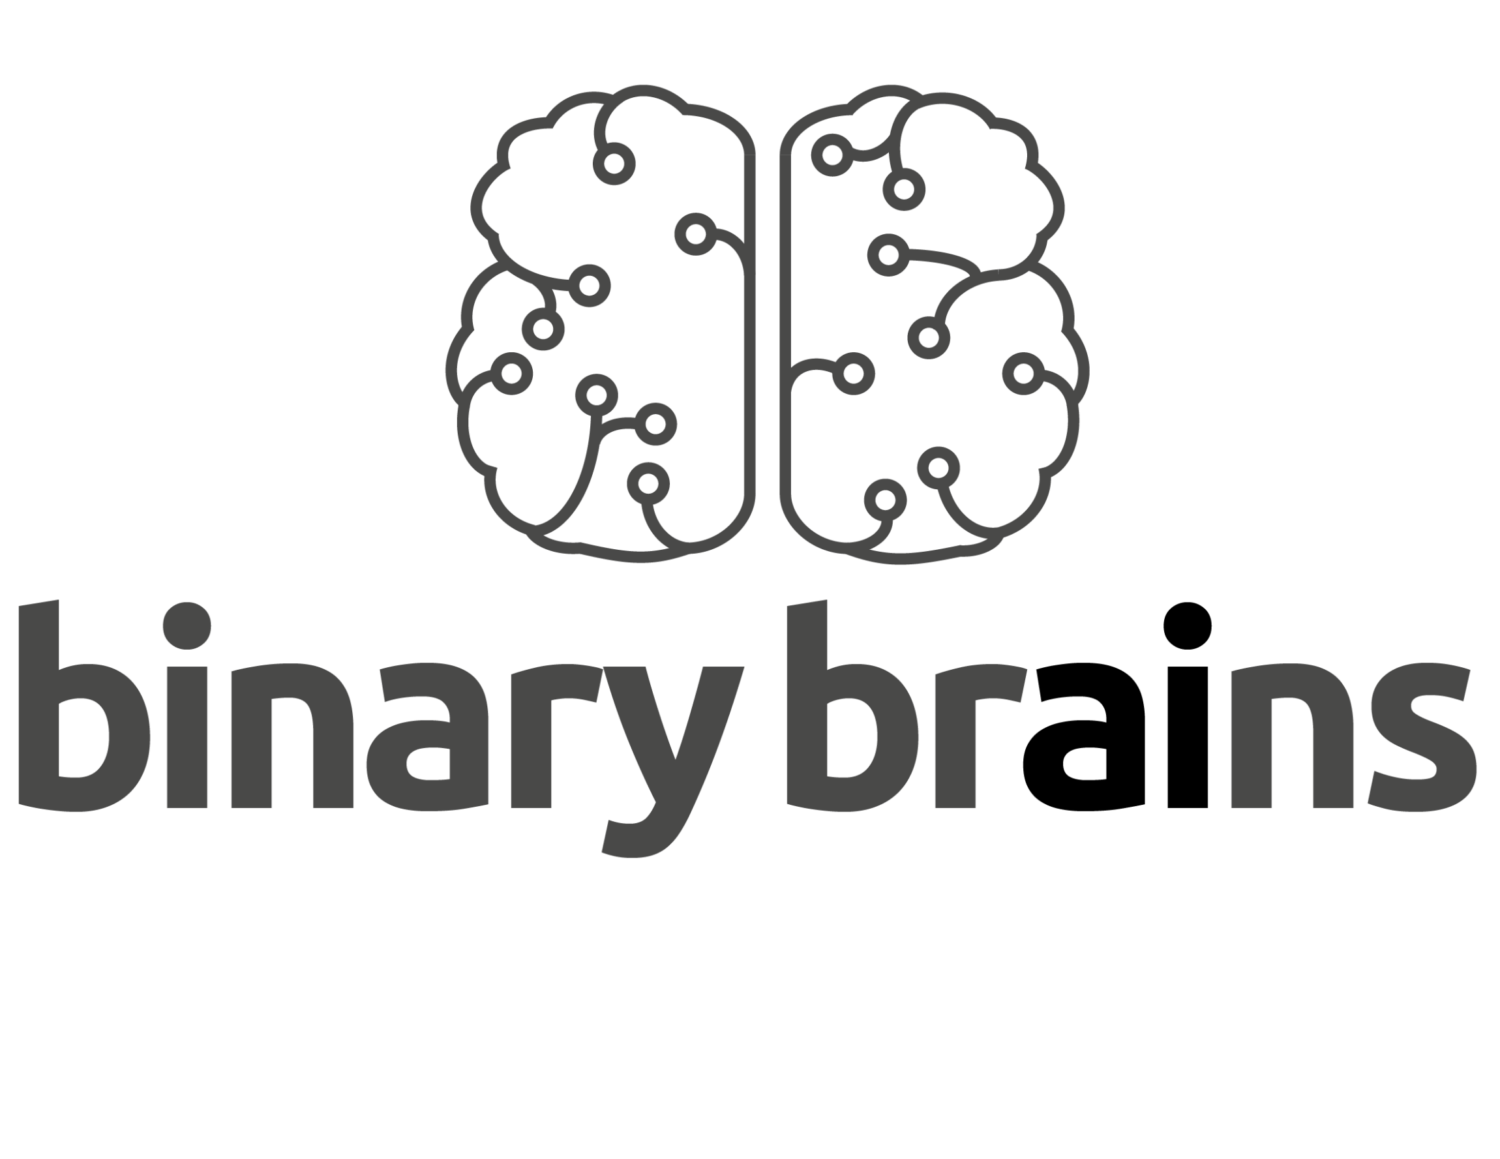 Binary Brains